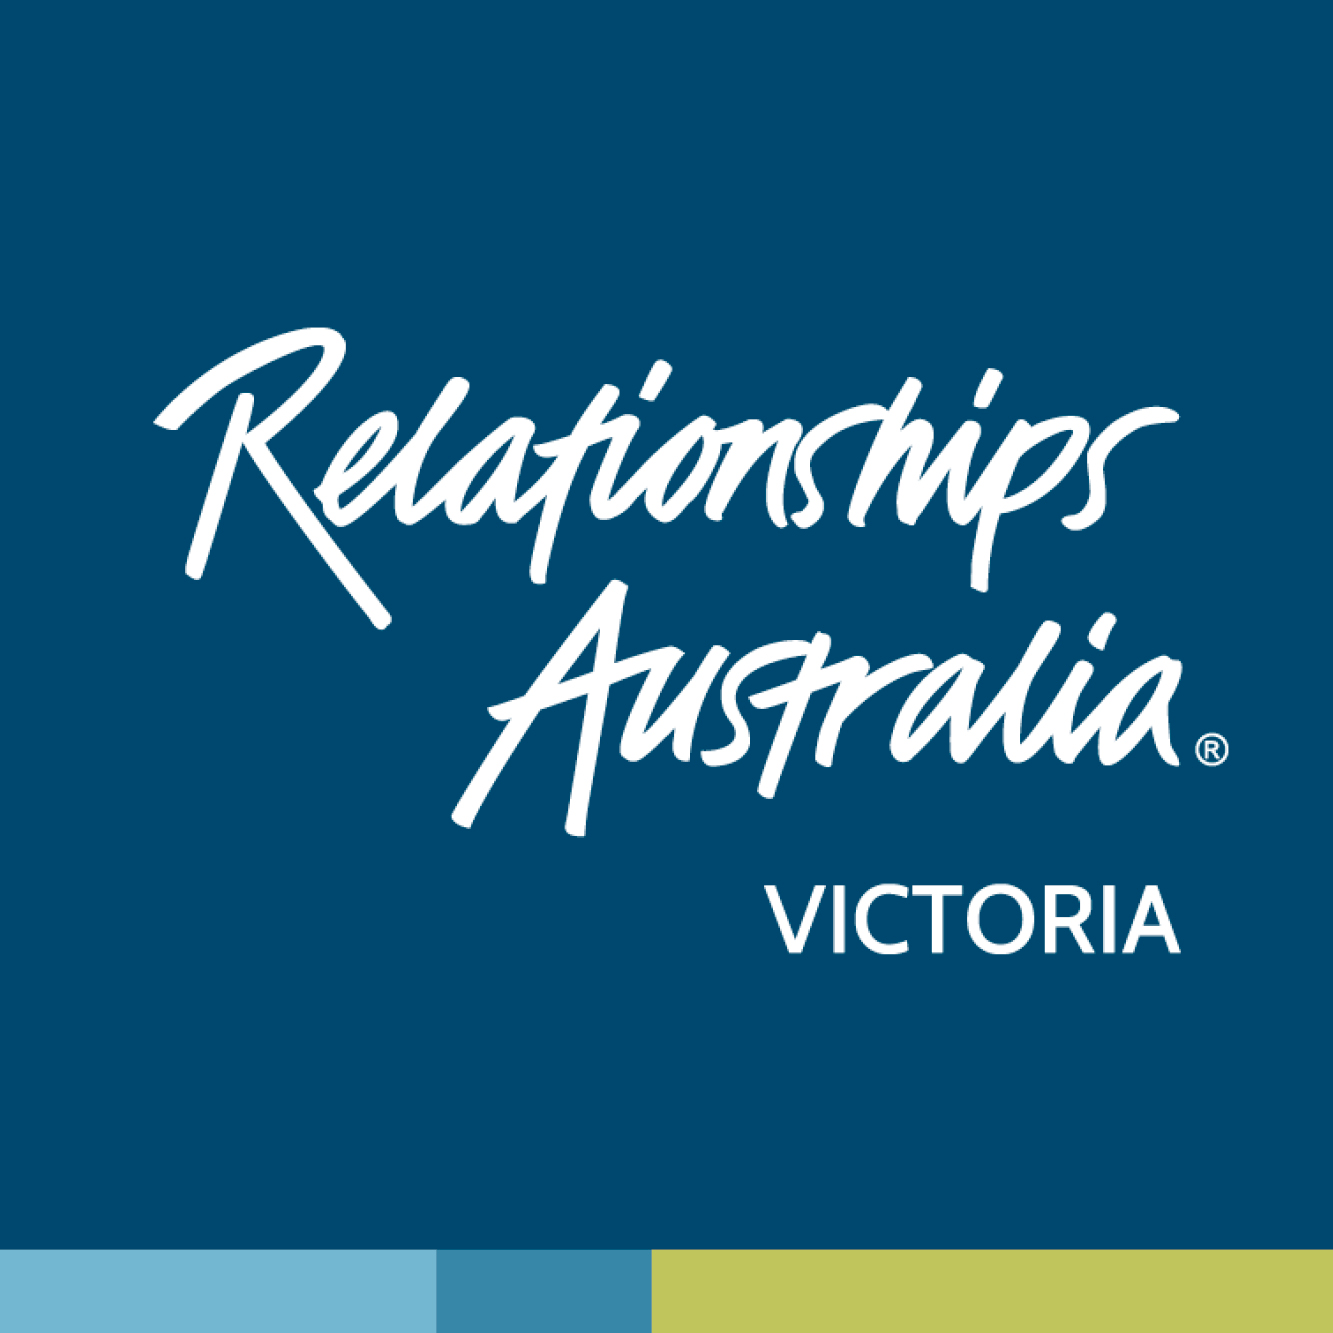 Images Relationships Australia Victoria